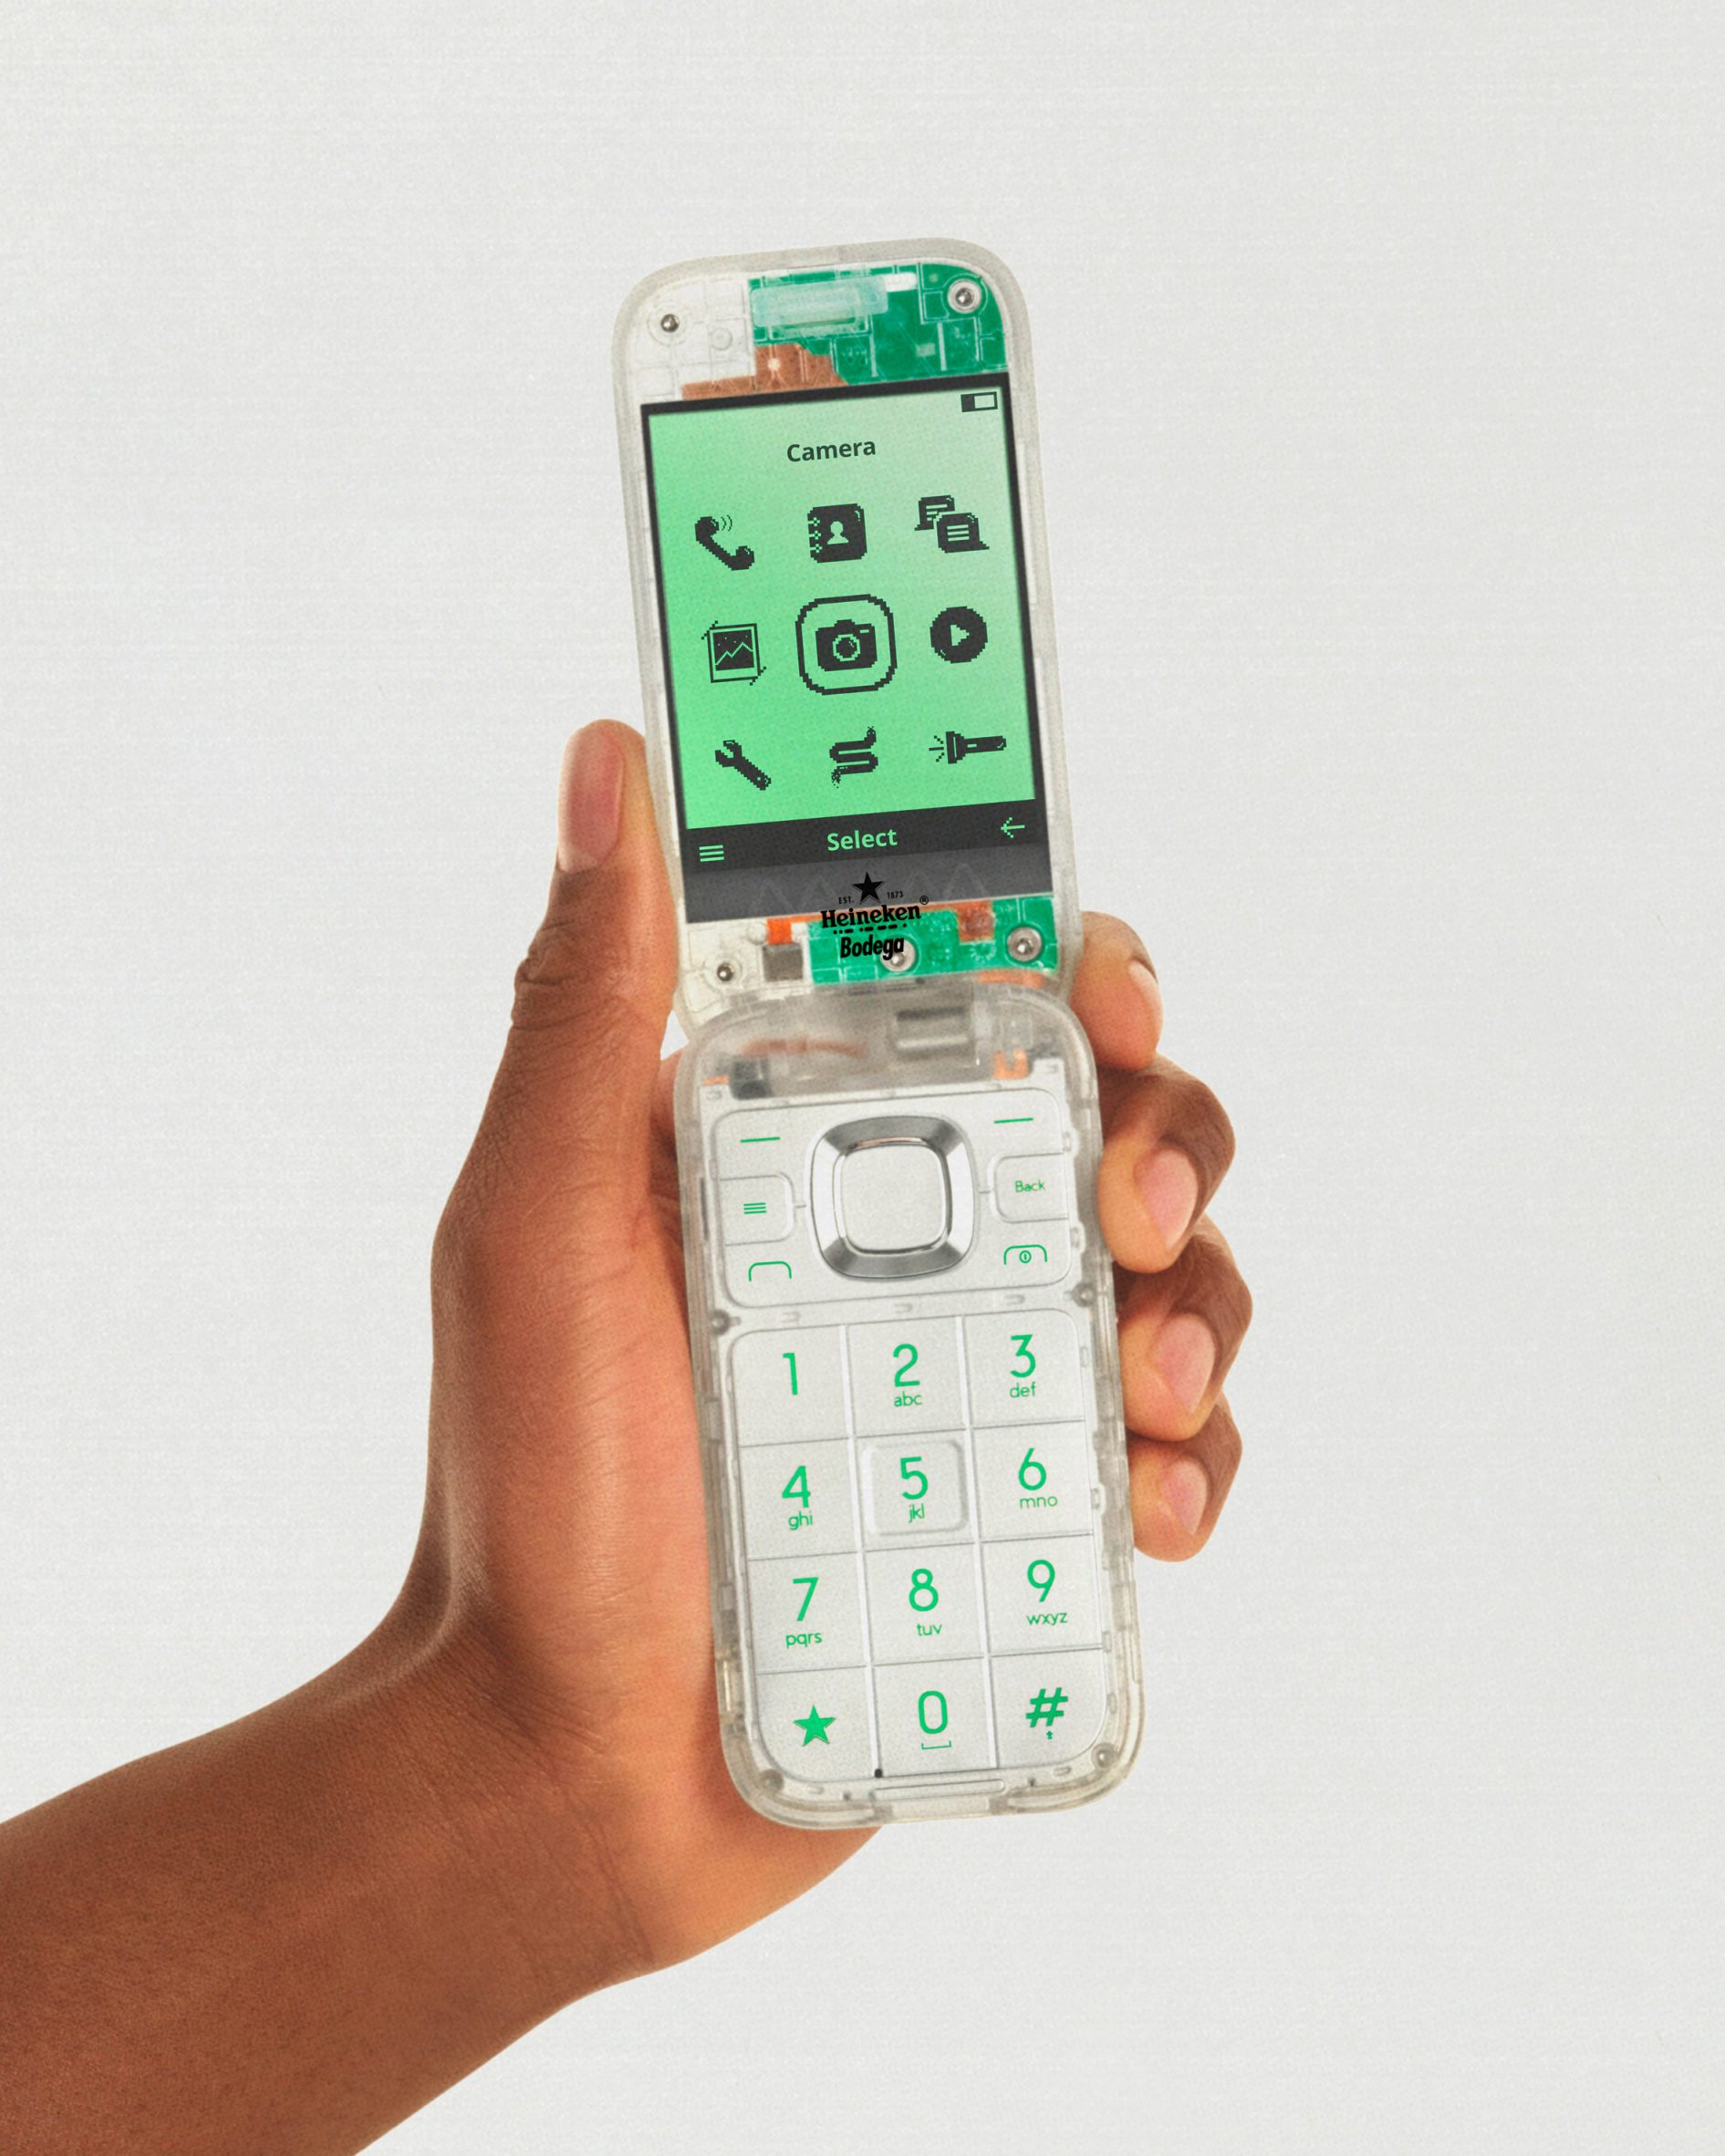 Nostalgic dumb phone by Heineken and Bodega